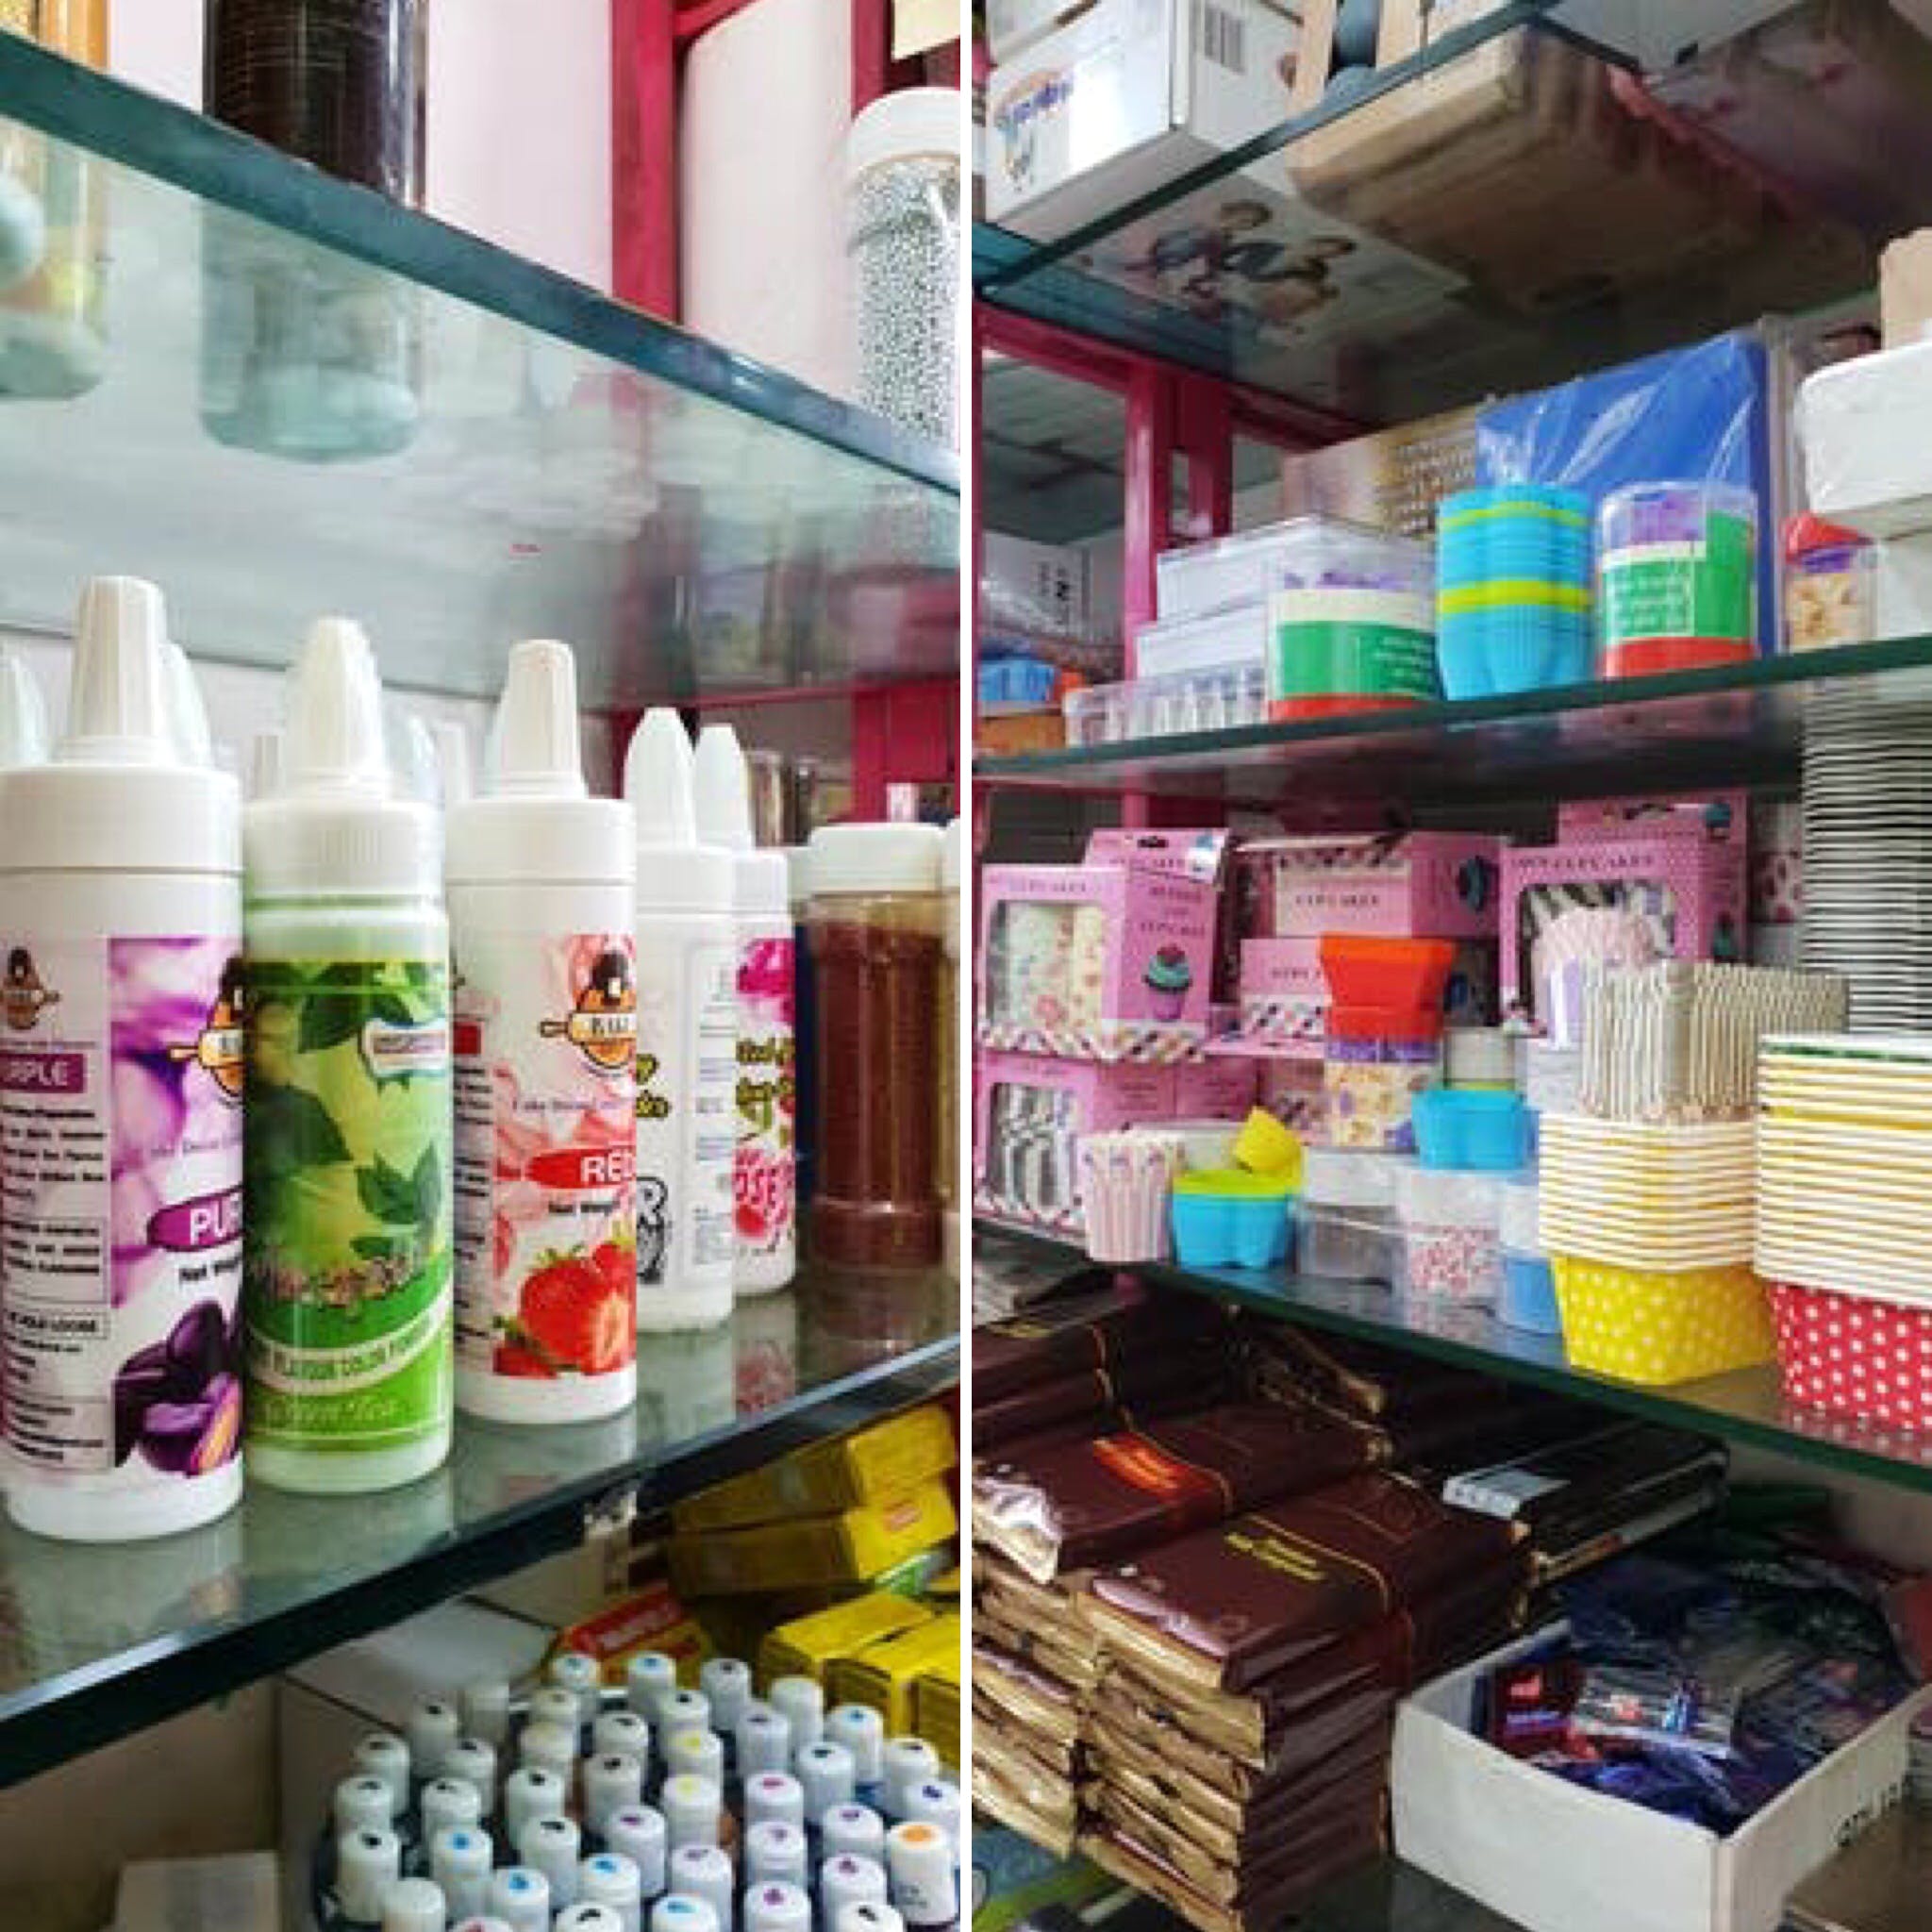 Product,Beauty,Plastic bottle,Convenience store,Retail,Shelf,Building,Plastic,Interior design,Grocery store